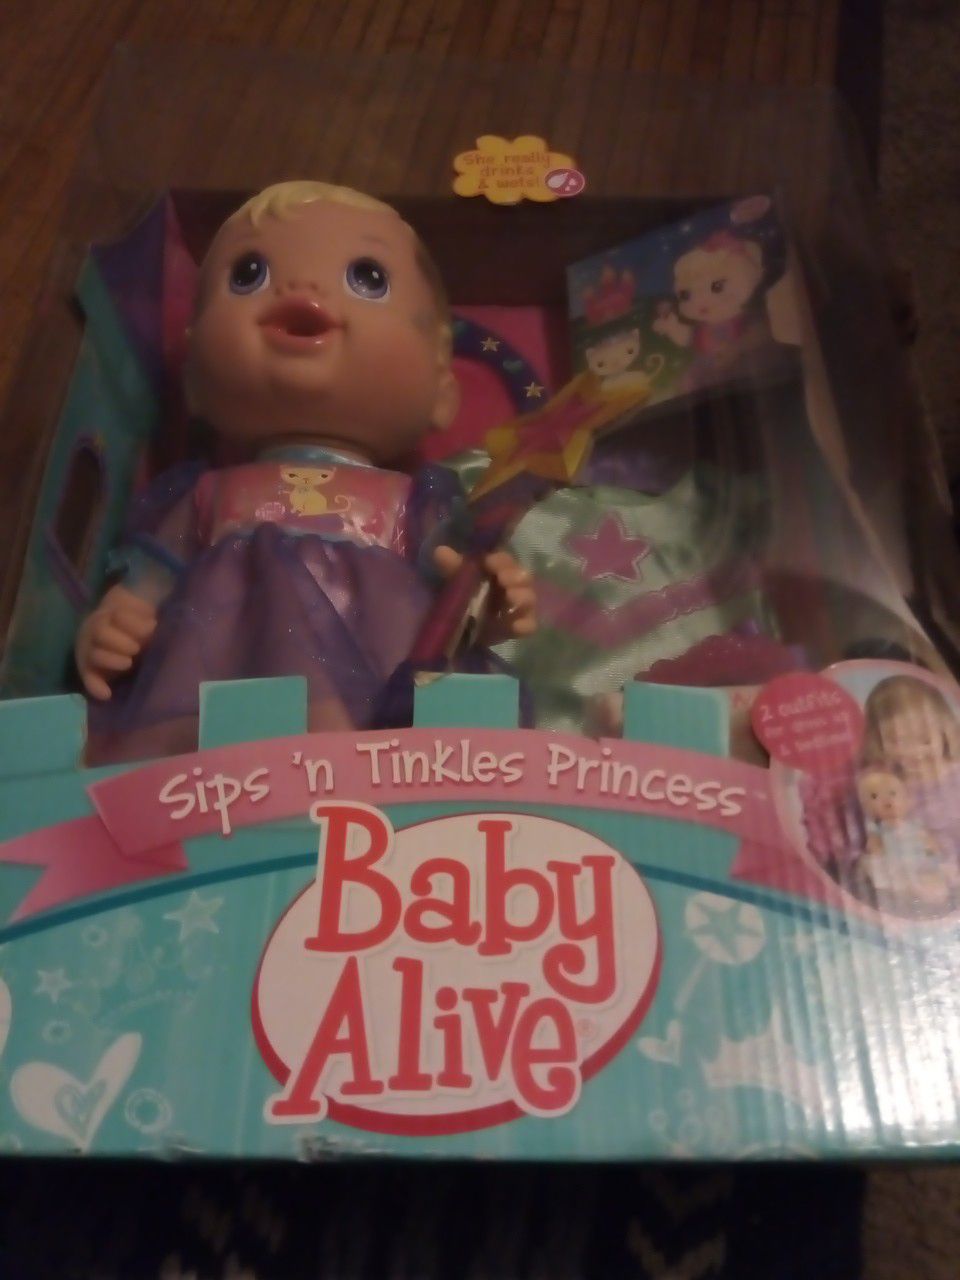 Baby Alive dolls